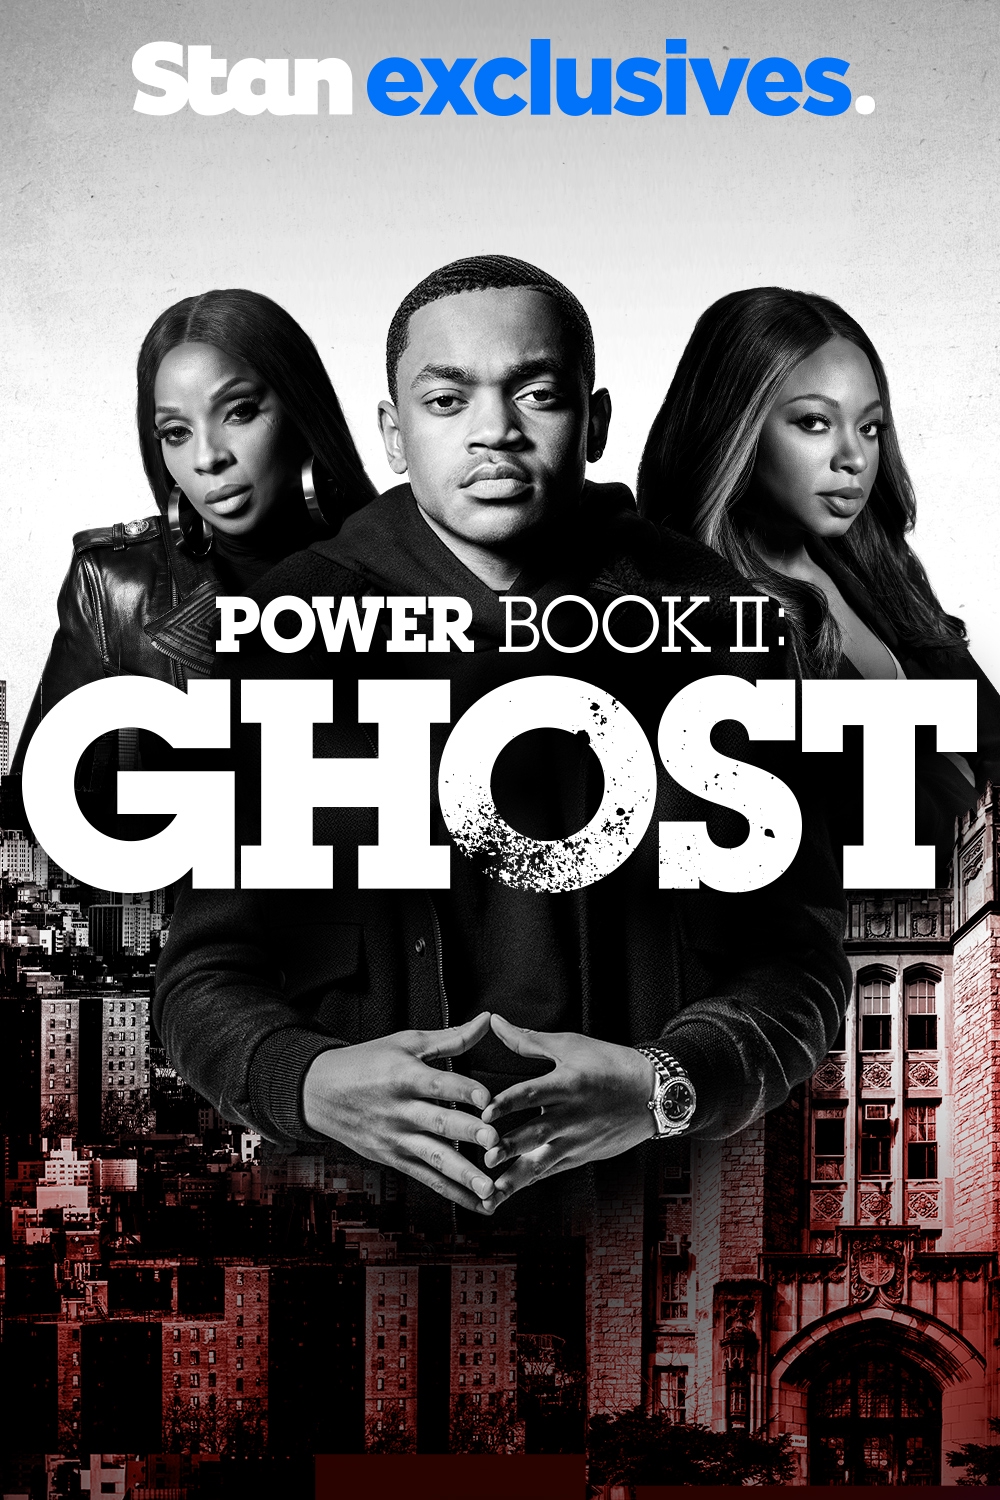 Power book s. Power книга. Power book II: Ghost. Власть в ночном городе книга 2 призрак.